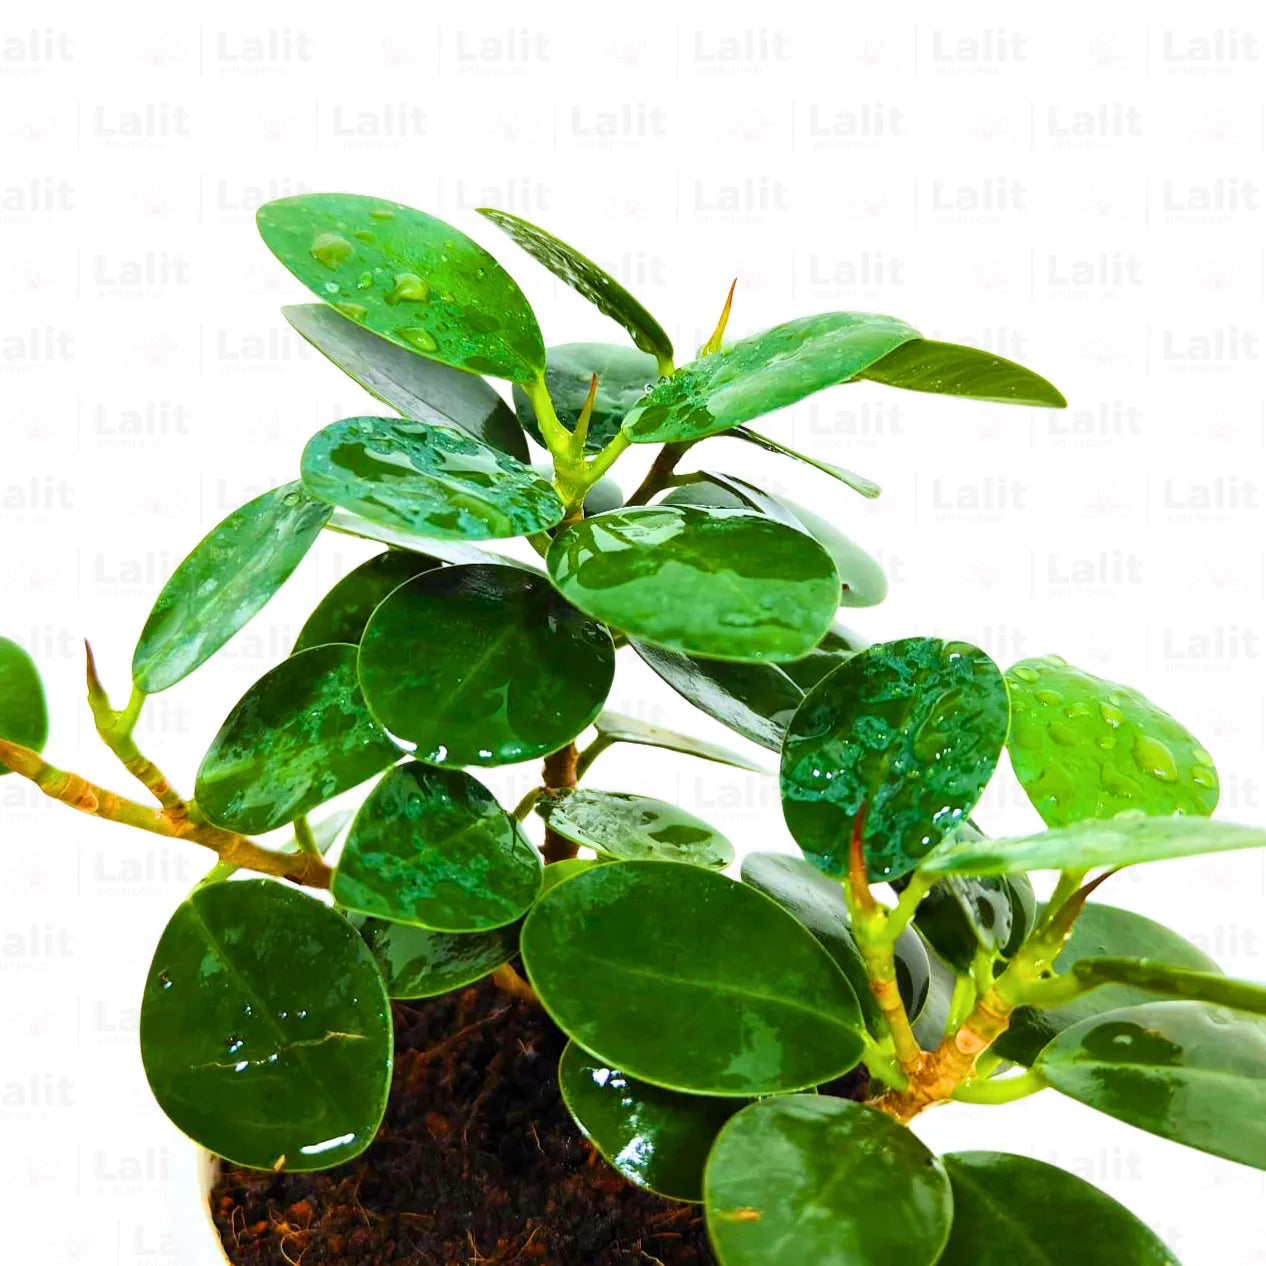 Buy Ficus Island (Microcarpa) "Dwarf" - Plant Online at Lalitenterprise